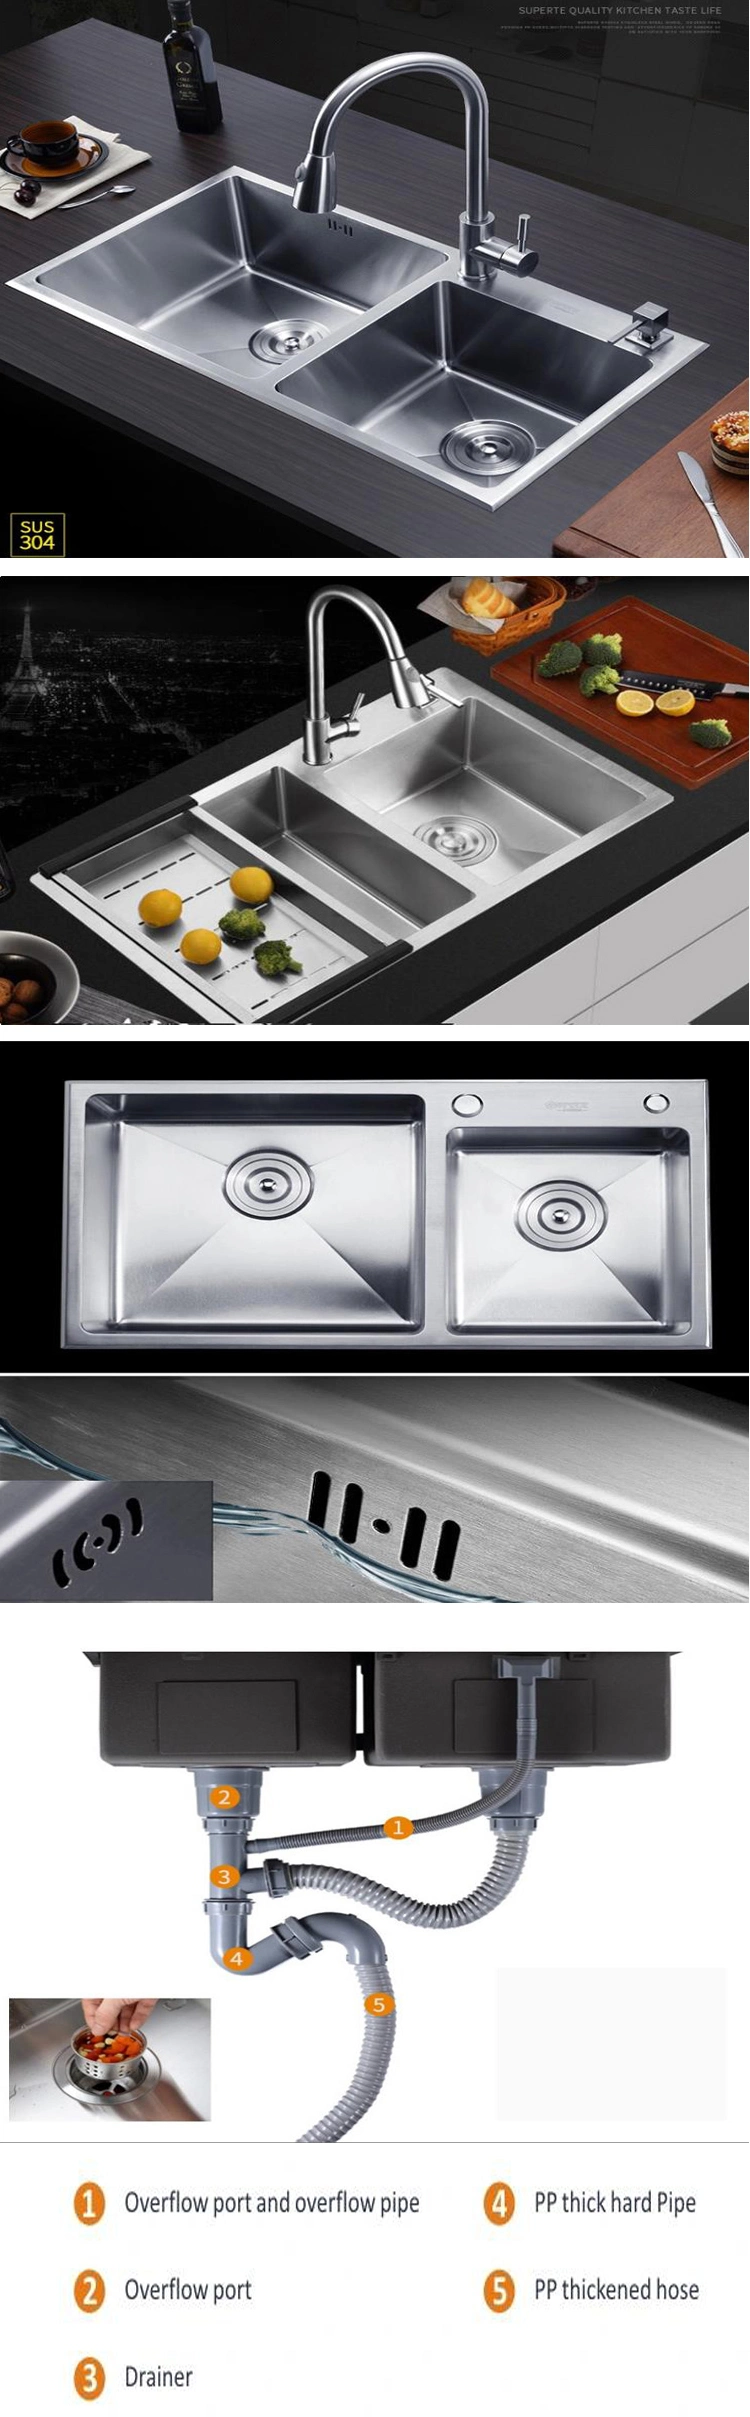 Discount Deep Bowl Professional Design Single Bowl Undermount Single Bowl Stainless Steel Kitchen Sink